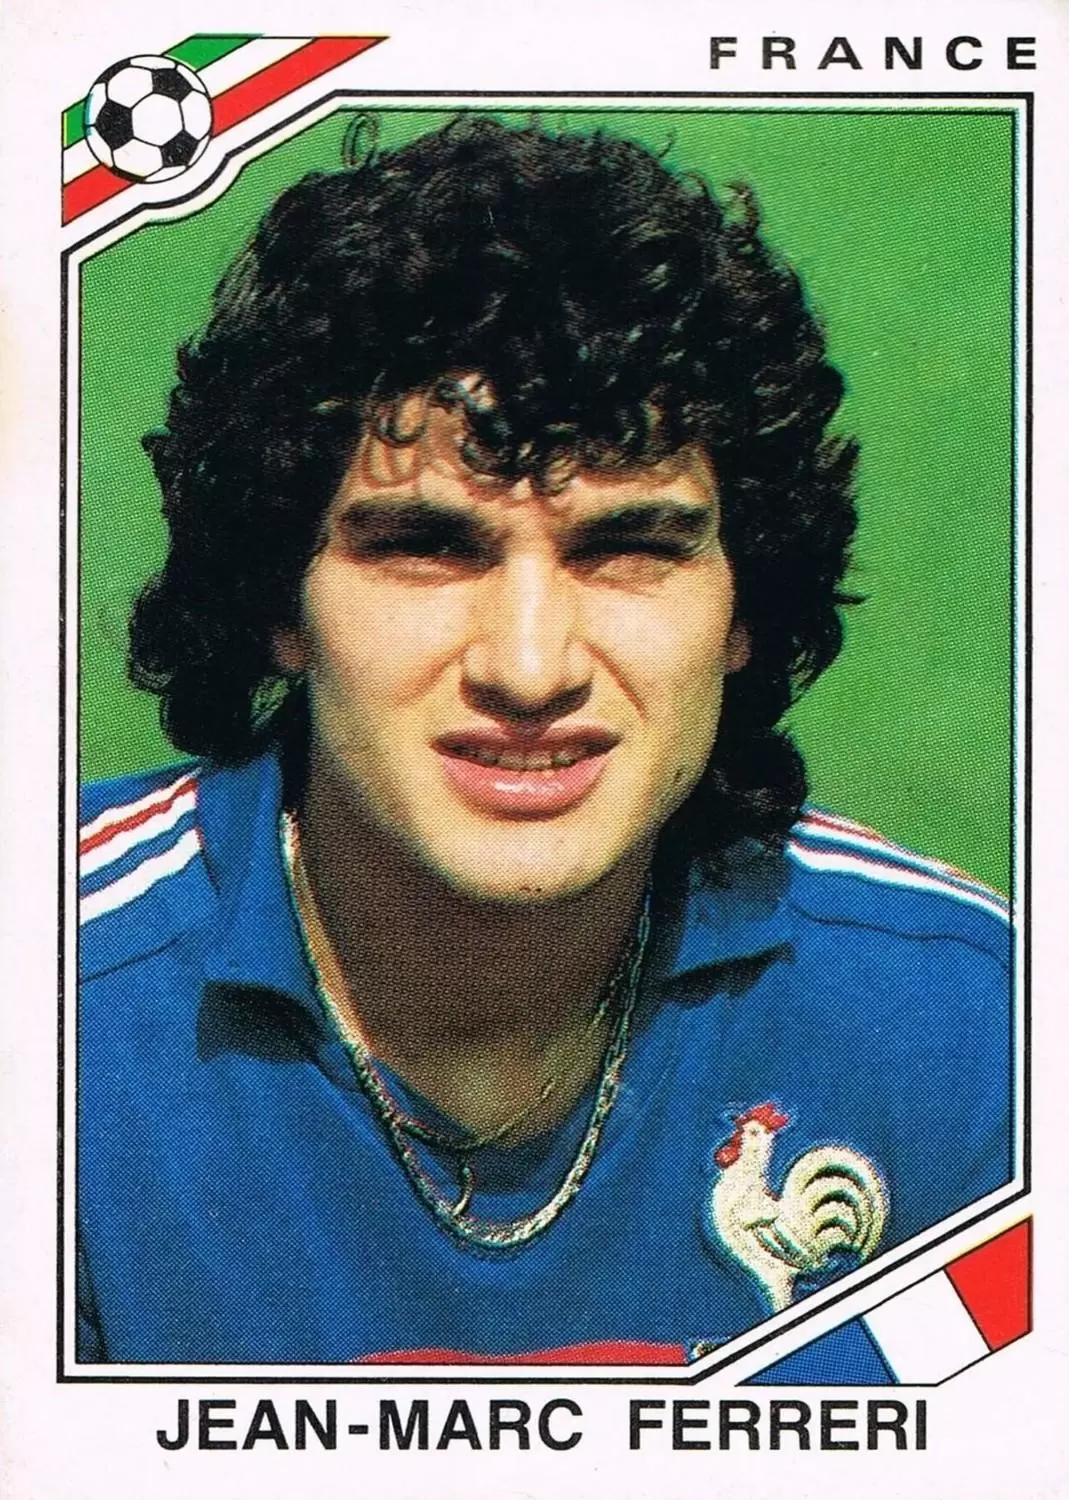 Mexico 86 World Cup - Jean-Marc Ferreri  - France